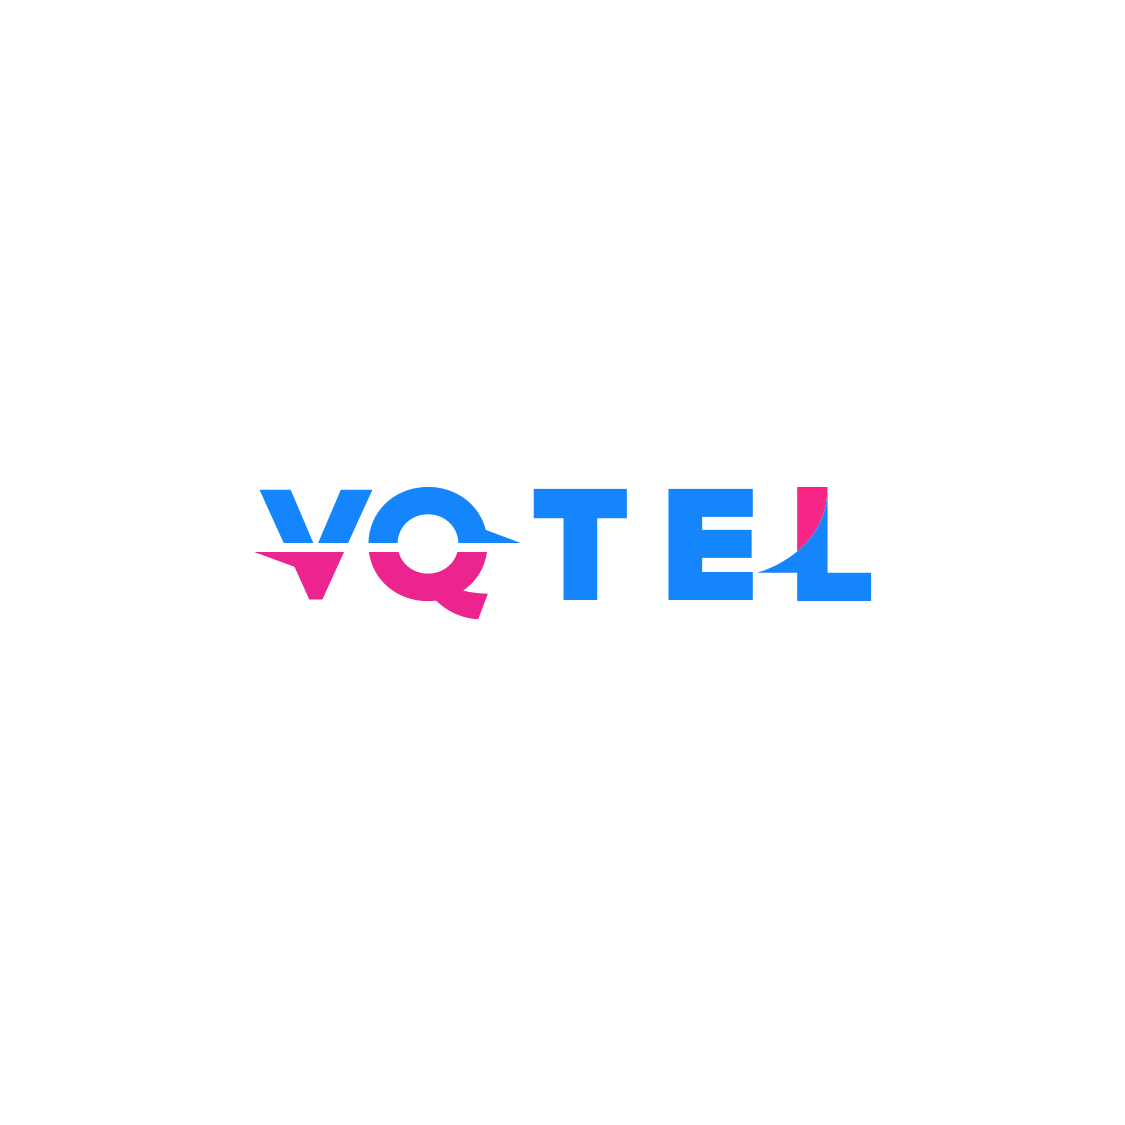 VQtel.com - domain for sale